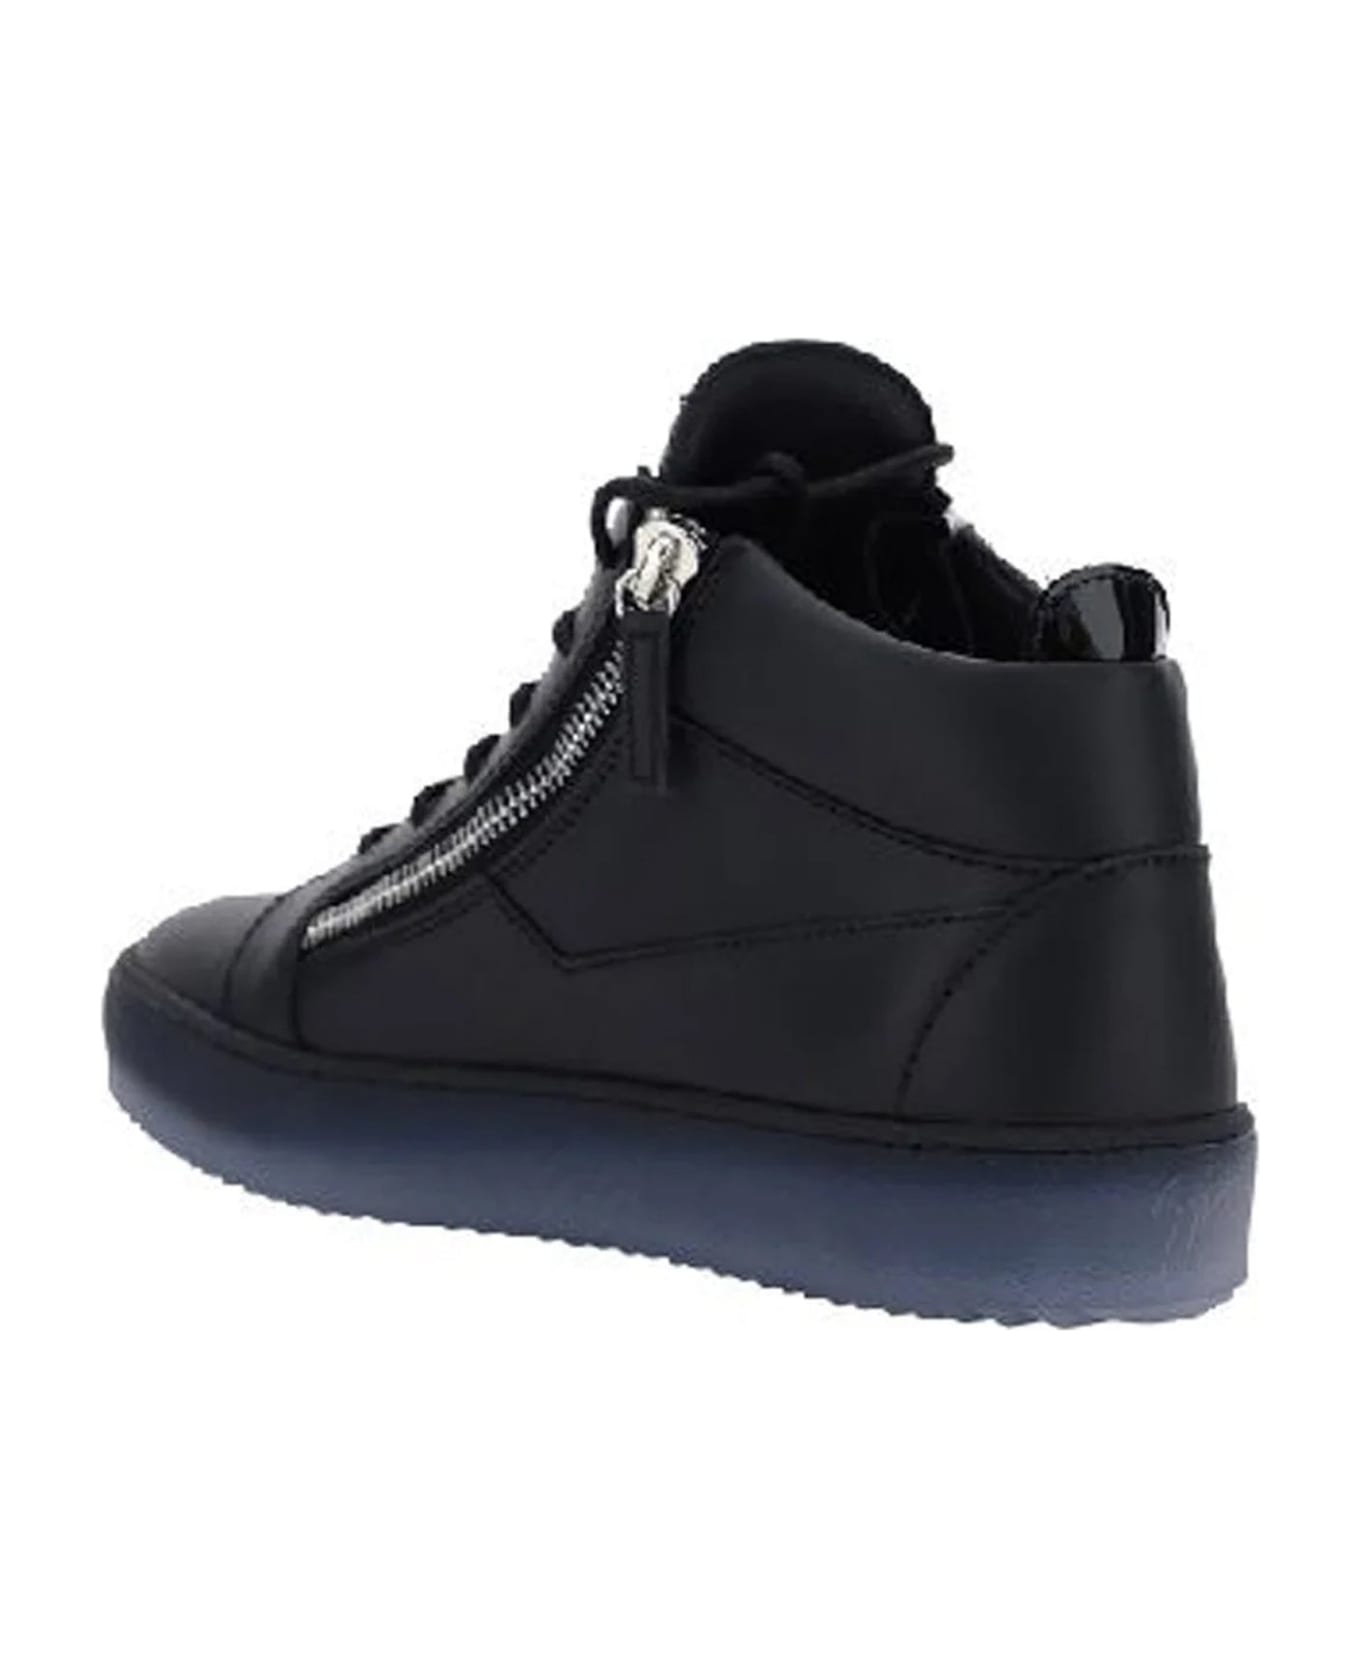 Giuseppe Zanotti May London Sneakers - Black スニーカー